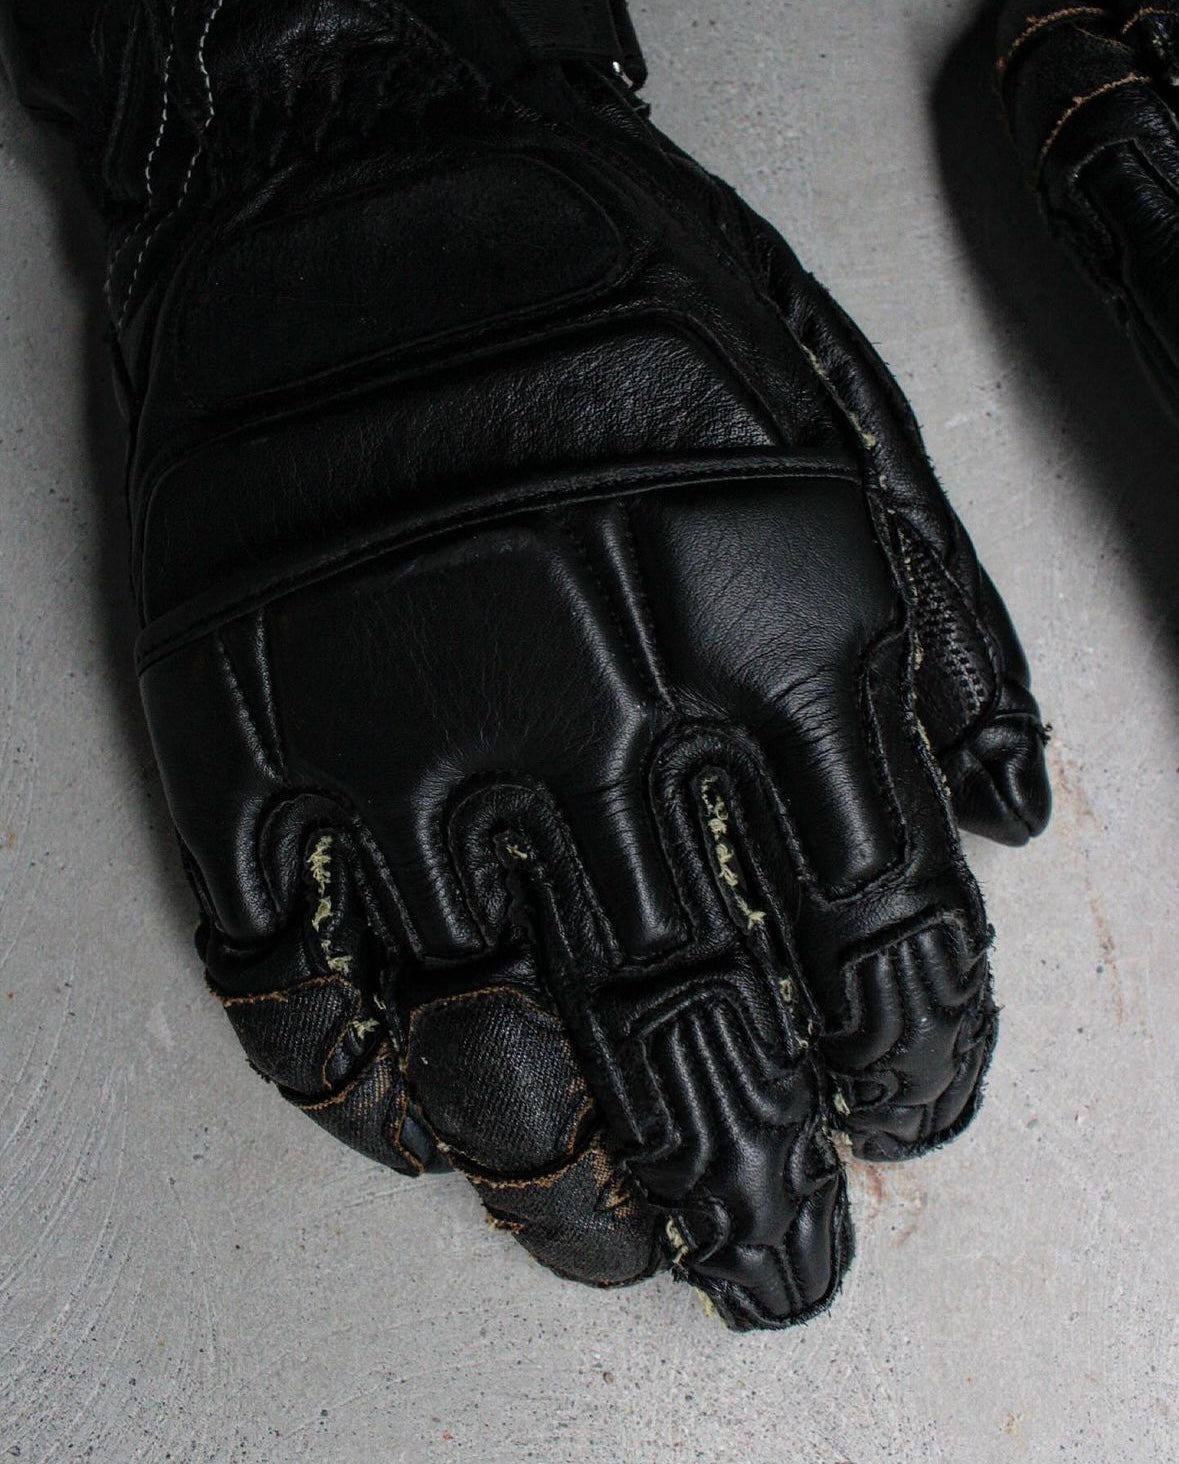 Kadoya x Kushitani “GPS GLOVE-K” Padded Lambskin Leather Motorcycle Gloves